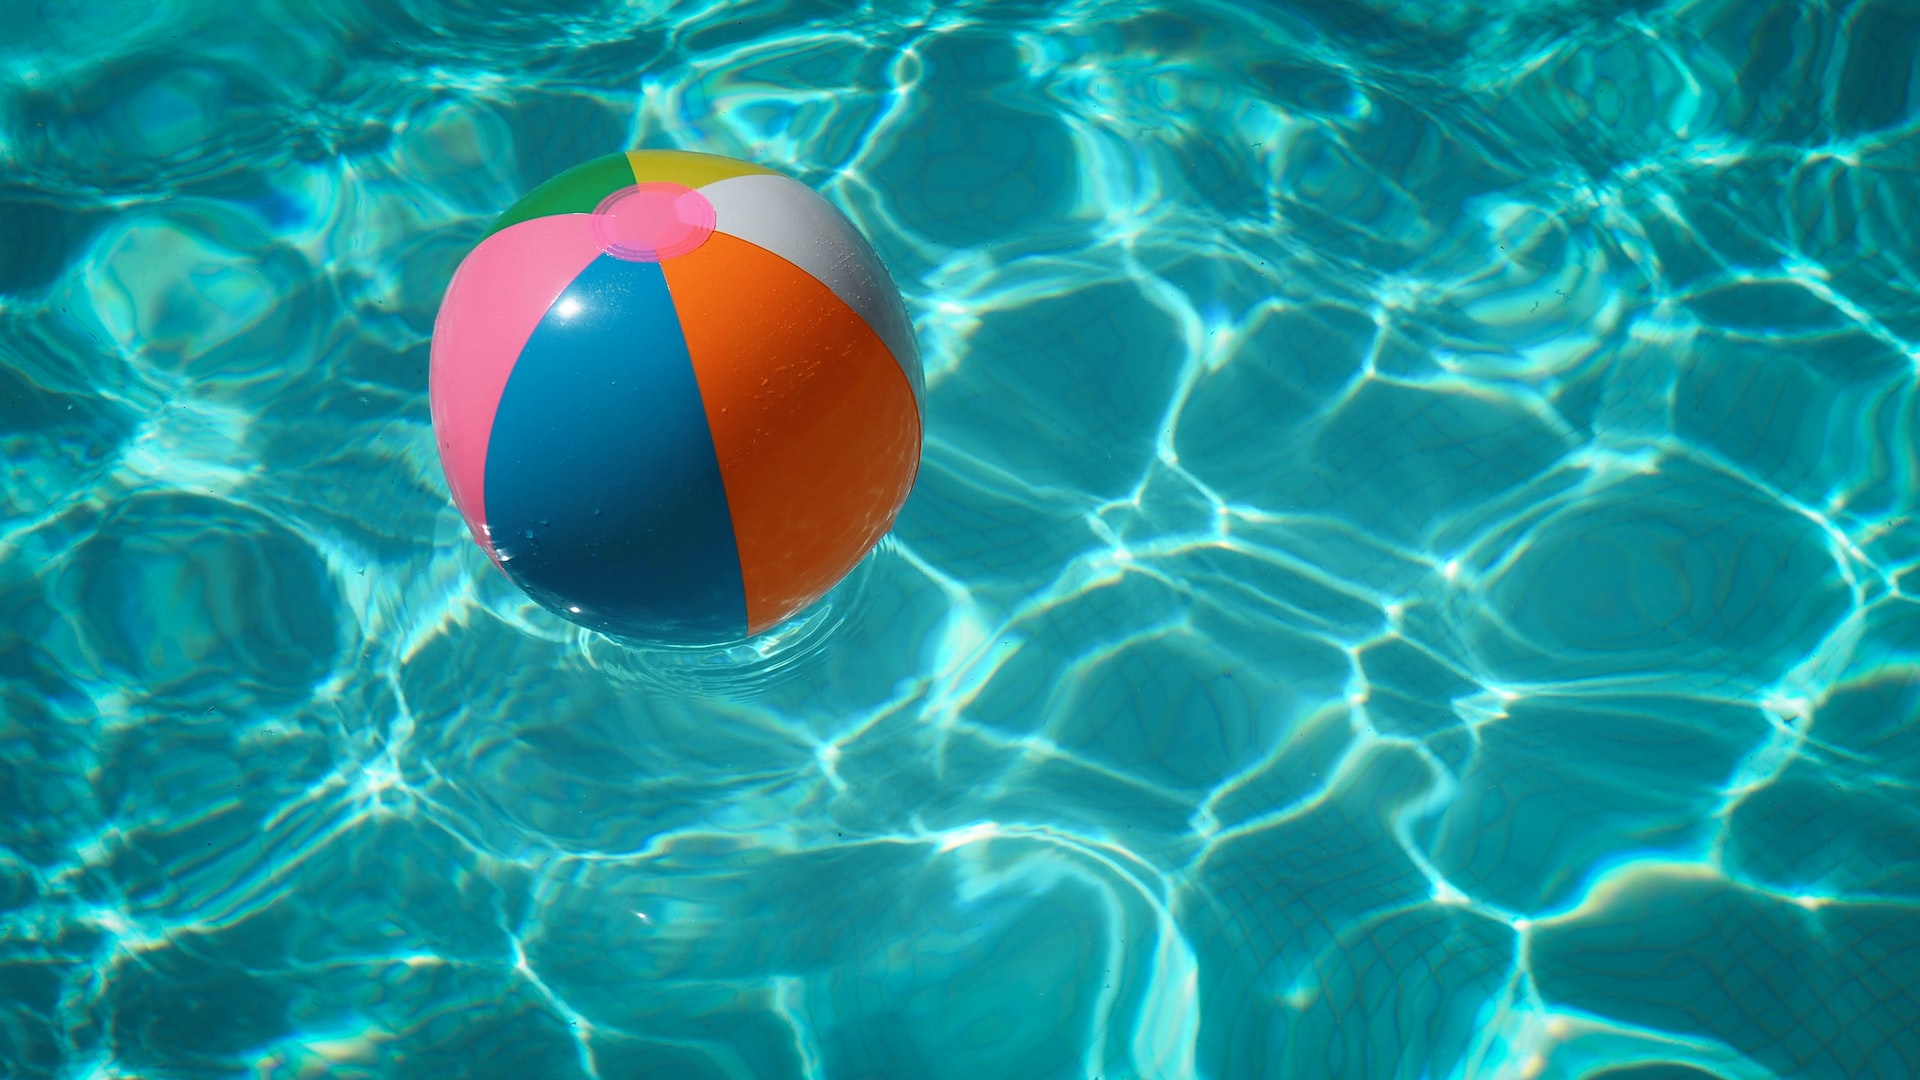 A colorful beach ball floating in a backyard pool.